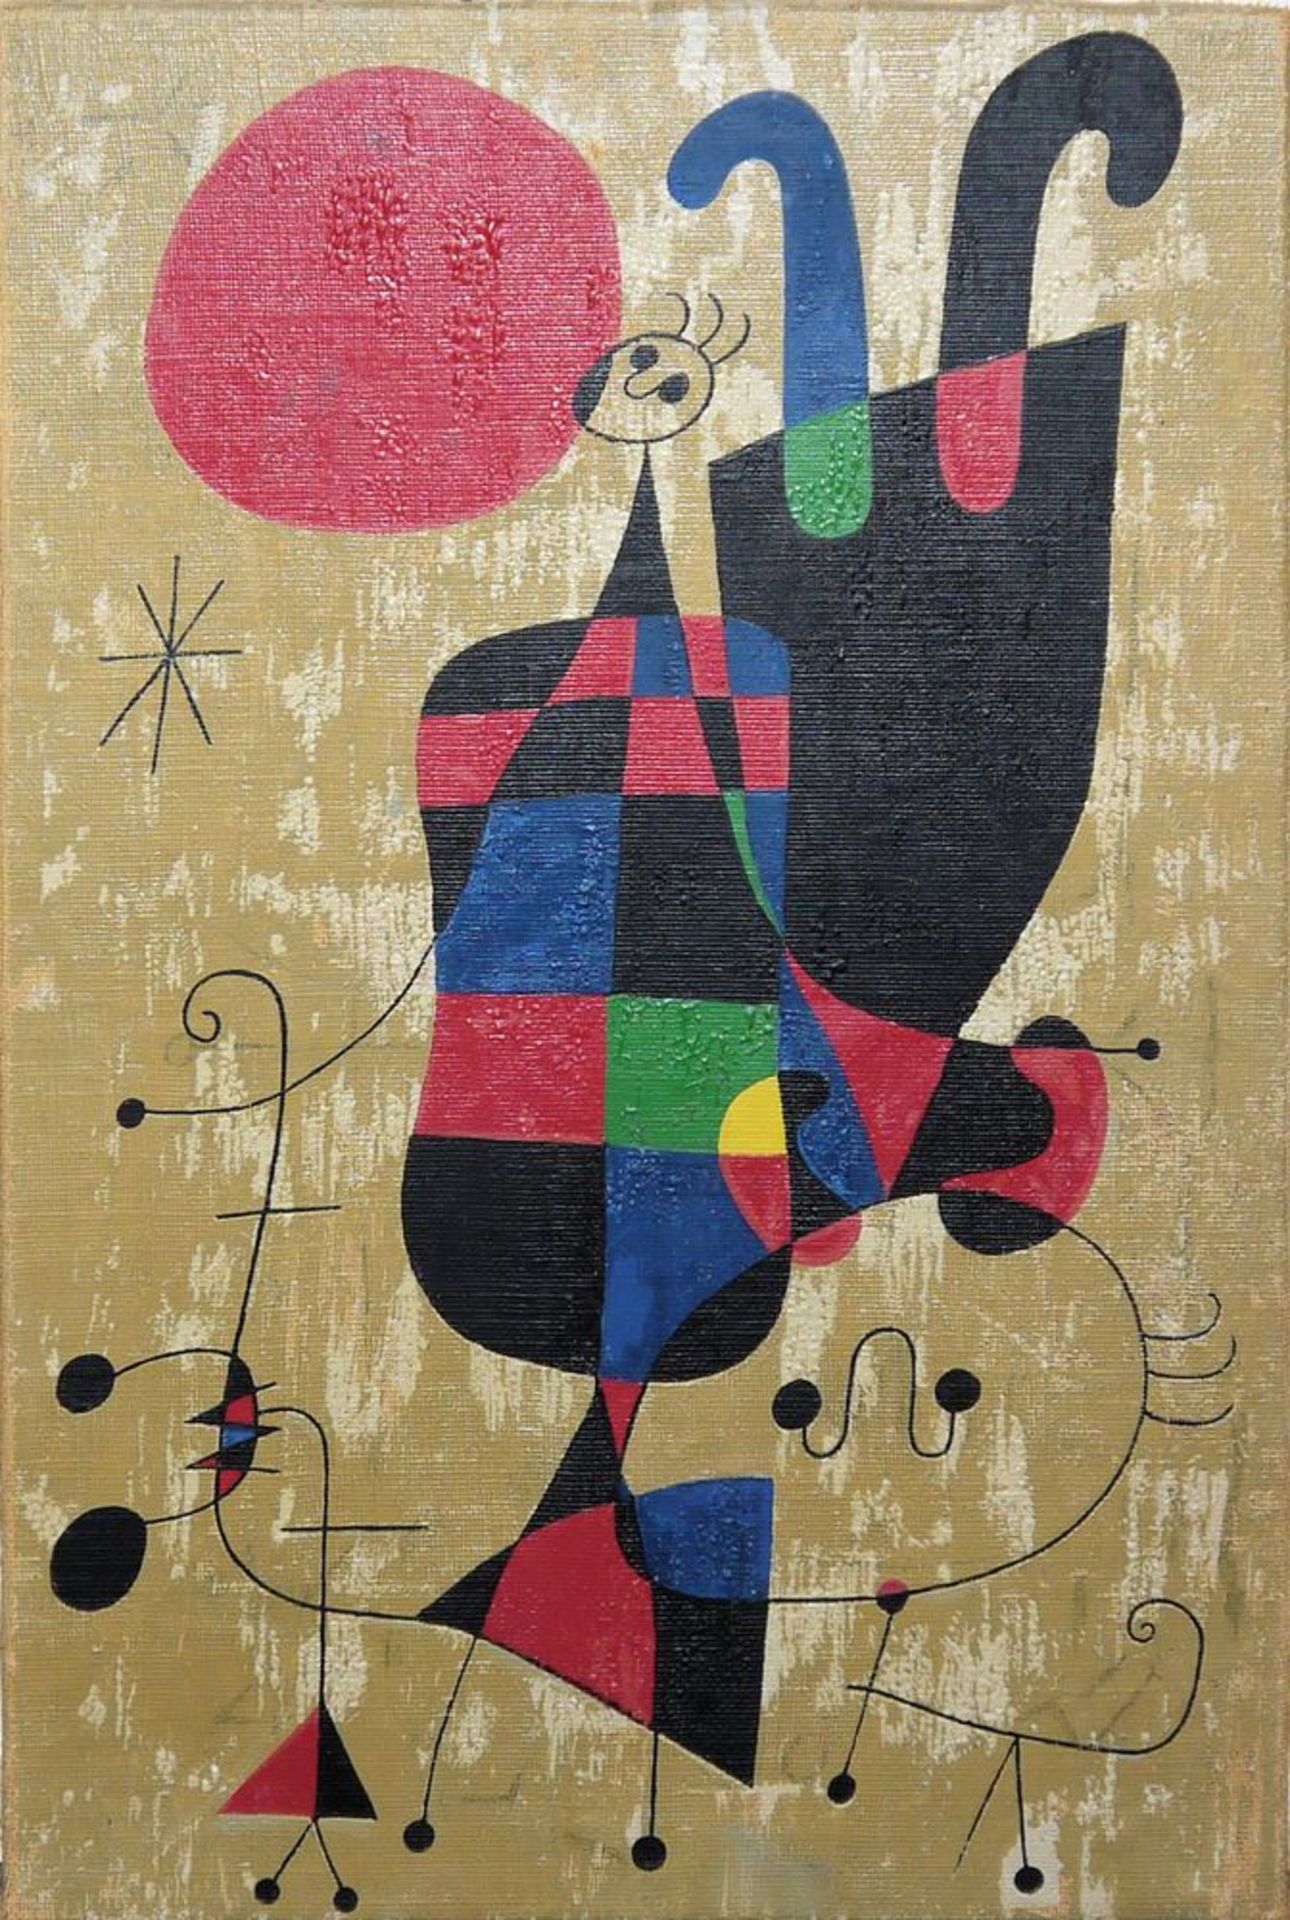 Joan Miro, qualitätvolle Kopie nach "Figures and dog in front of the sun" von 1